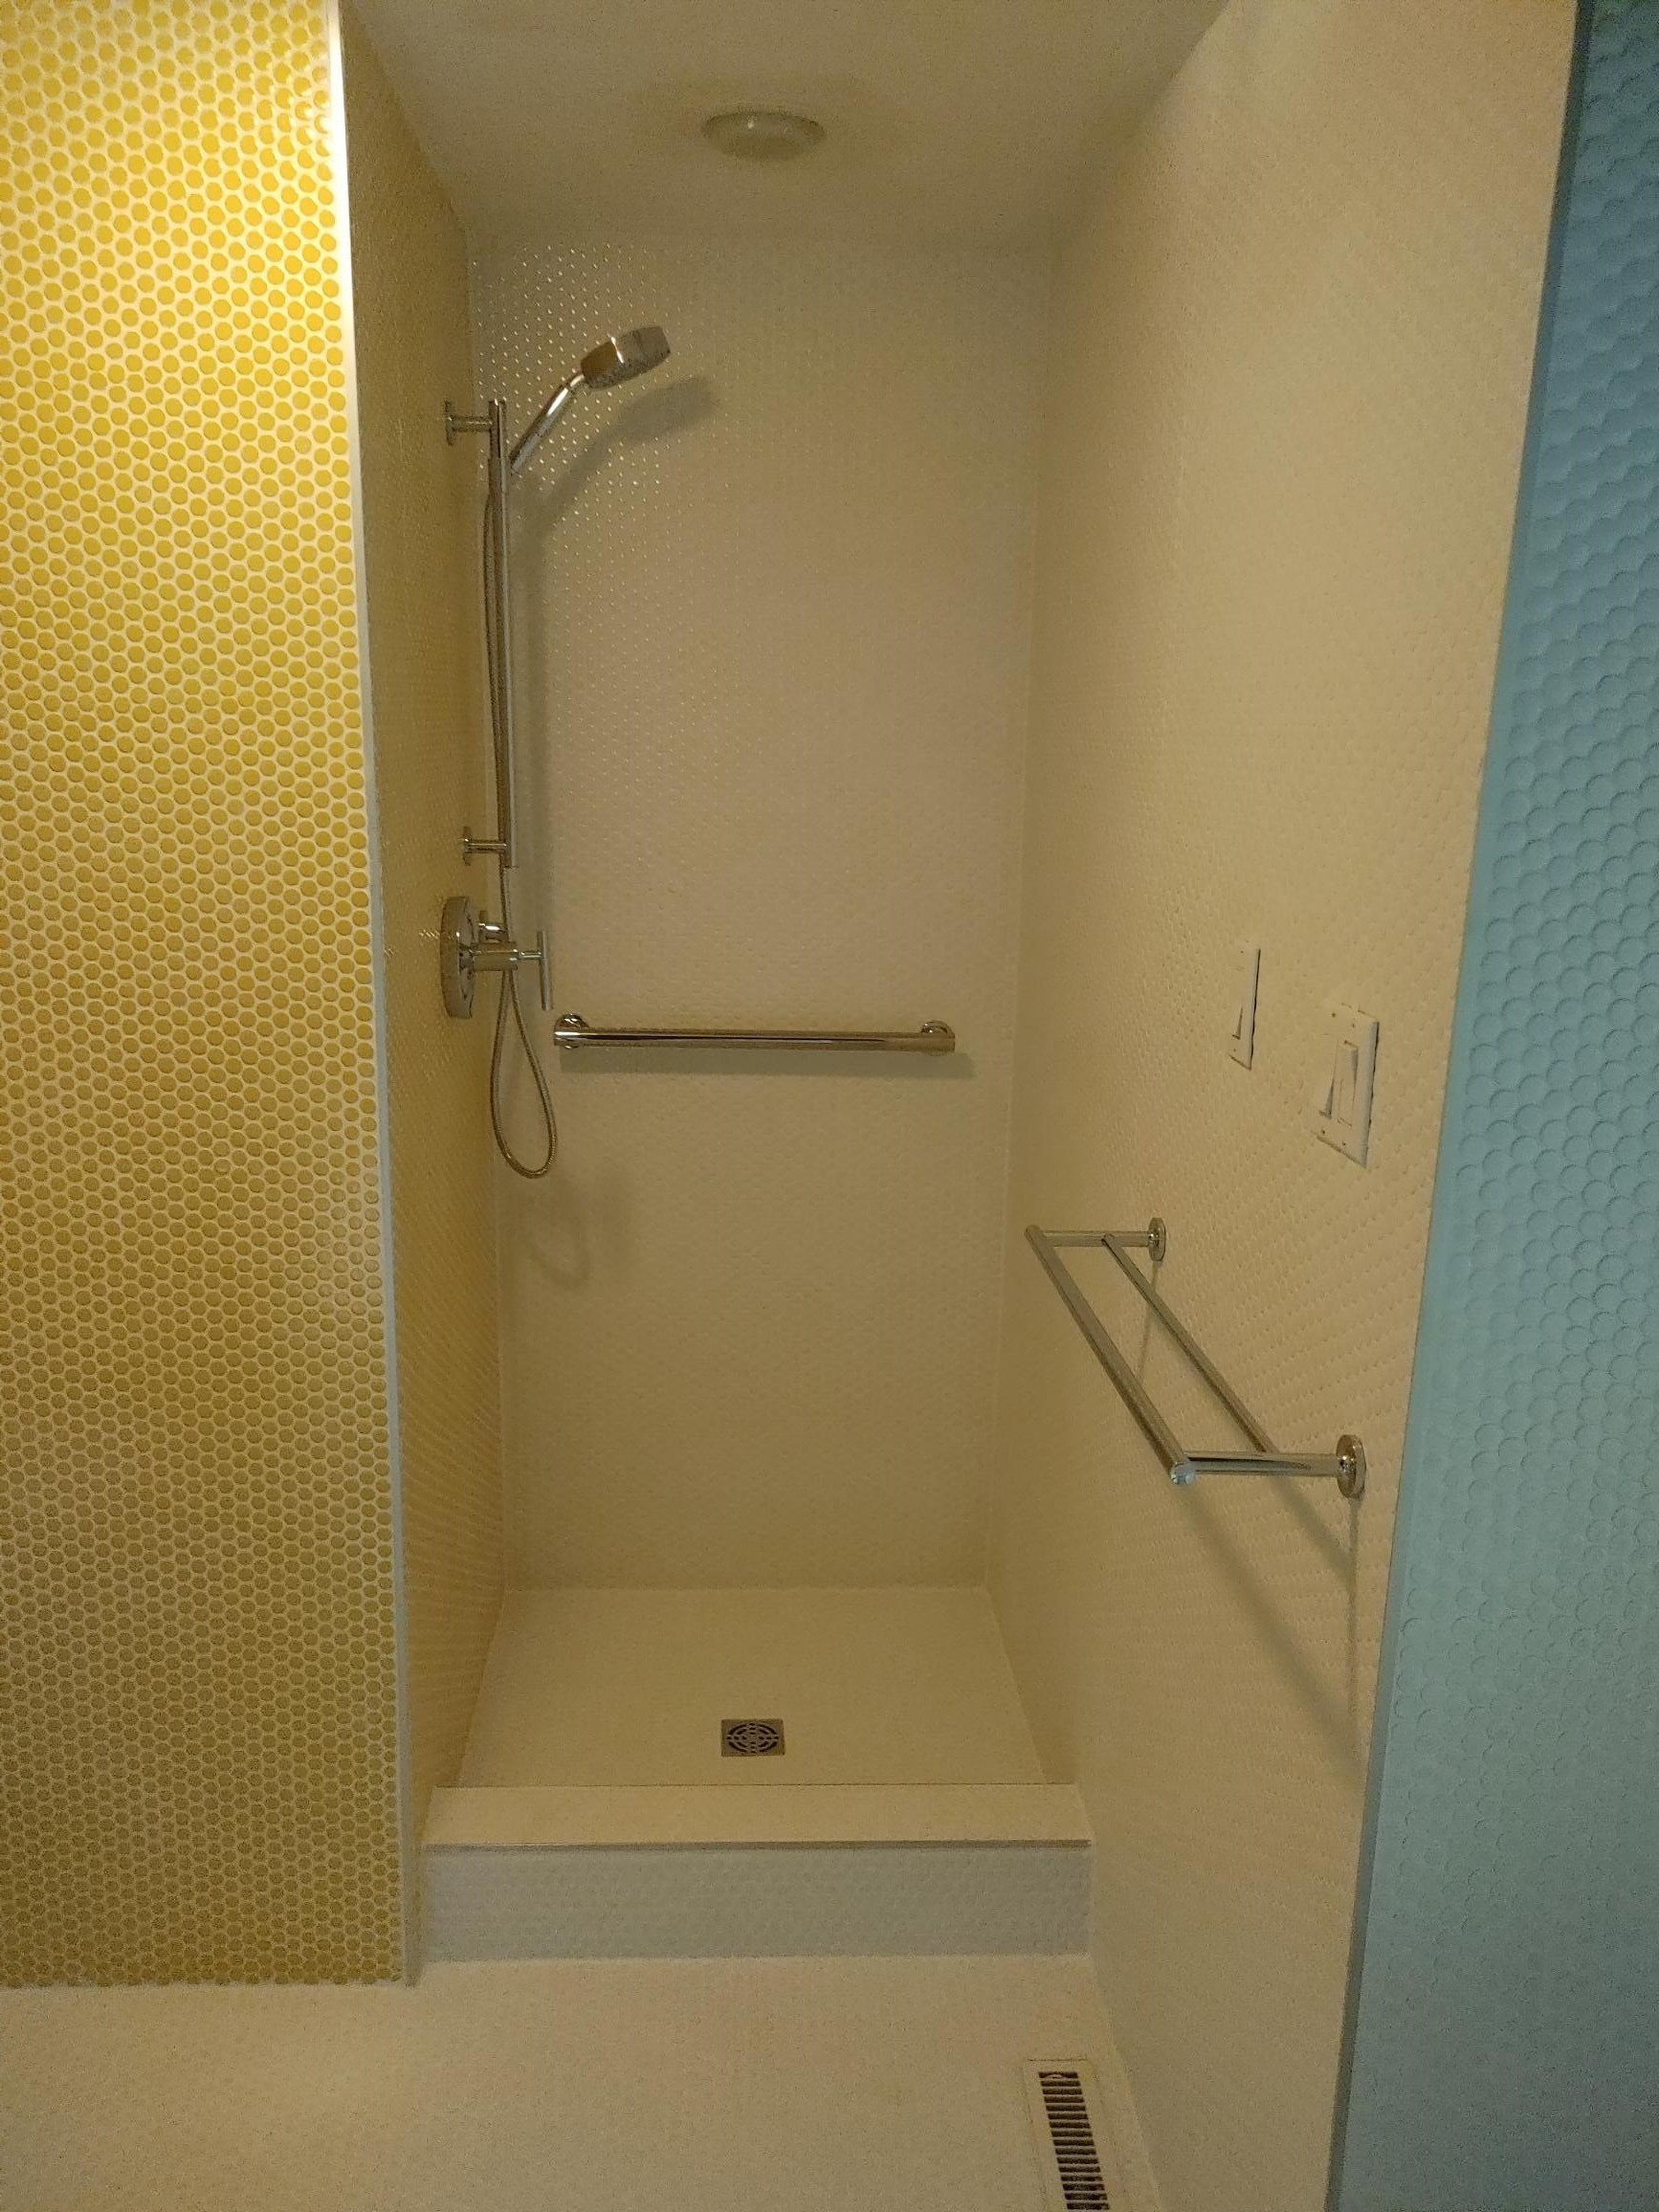 Alburquerque  bathroom remodel